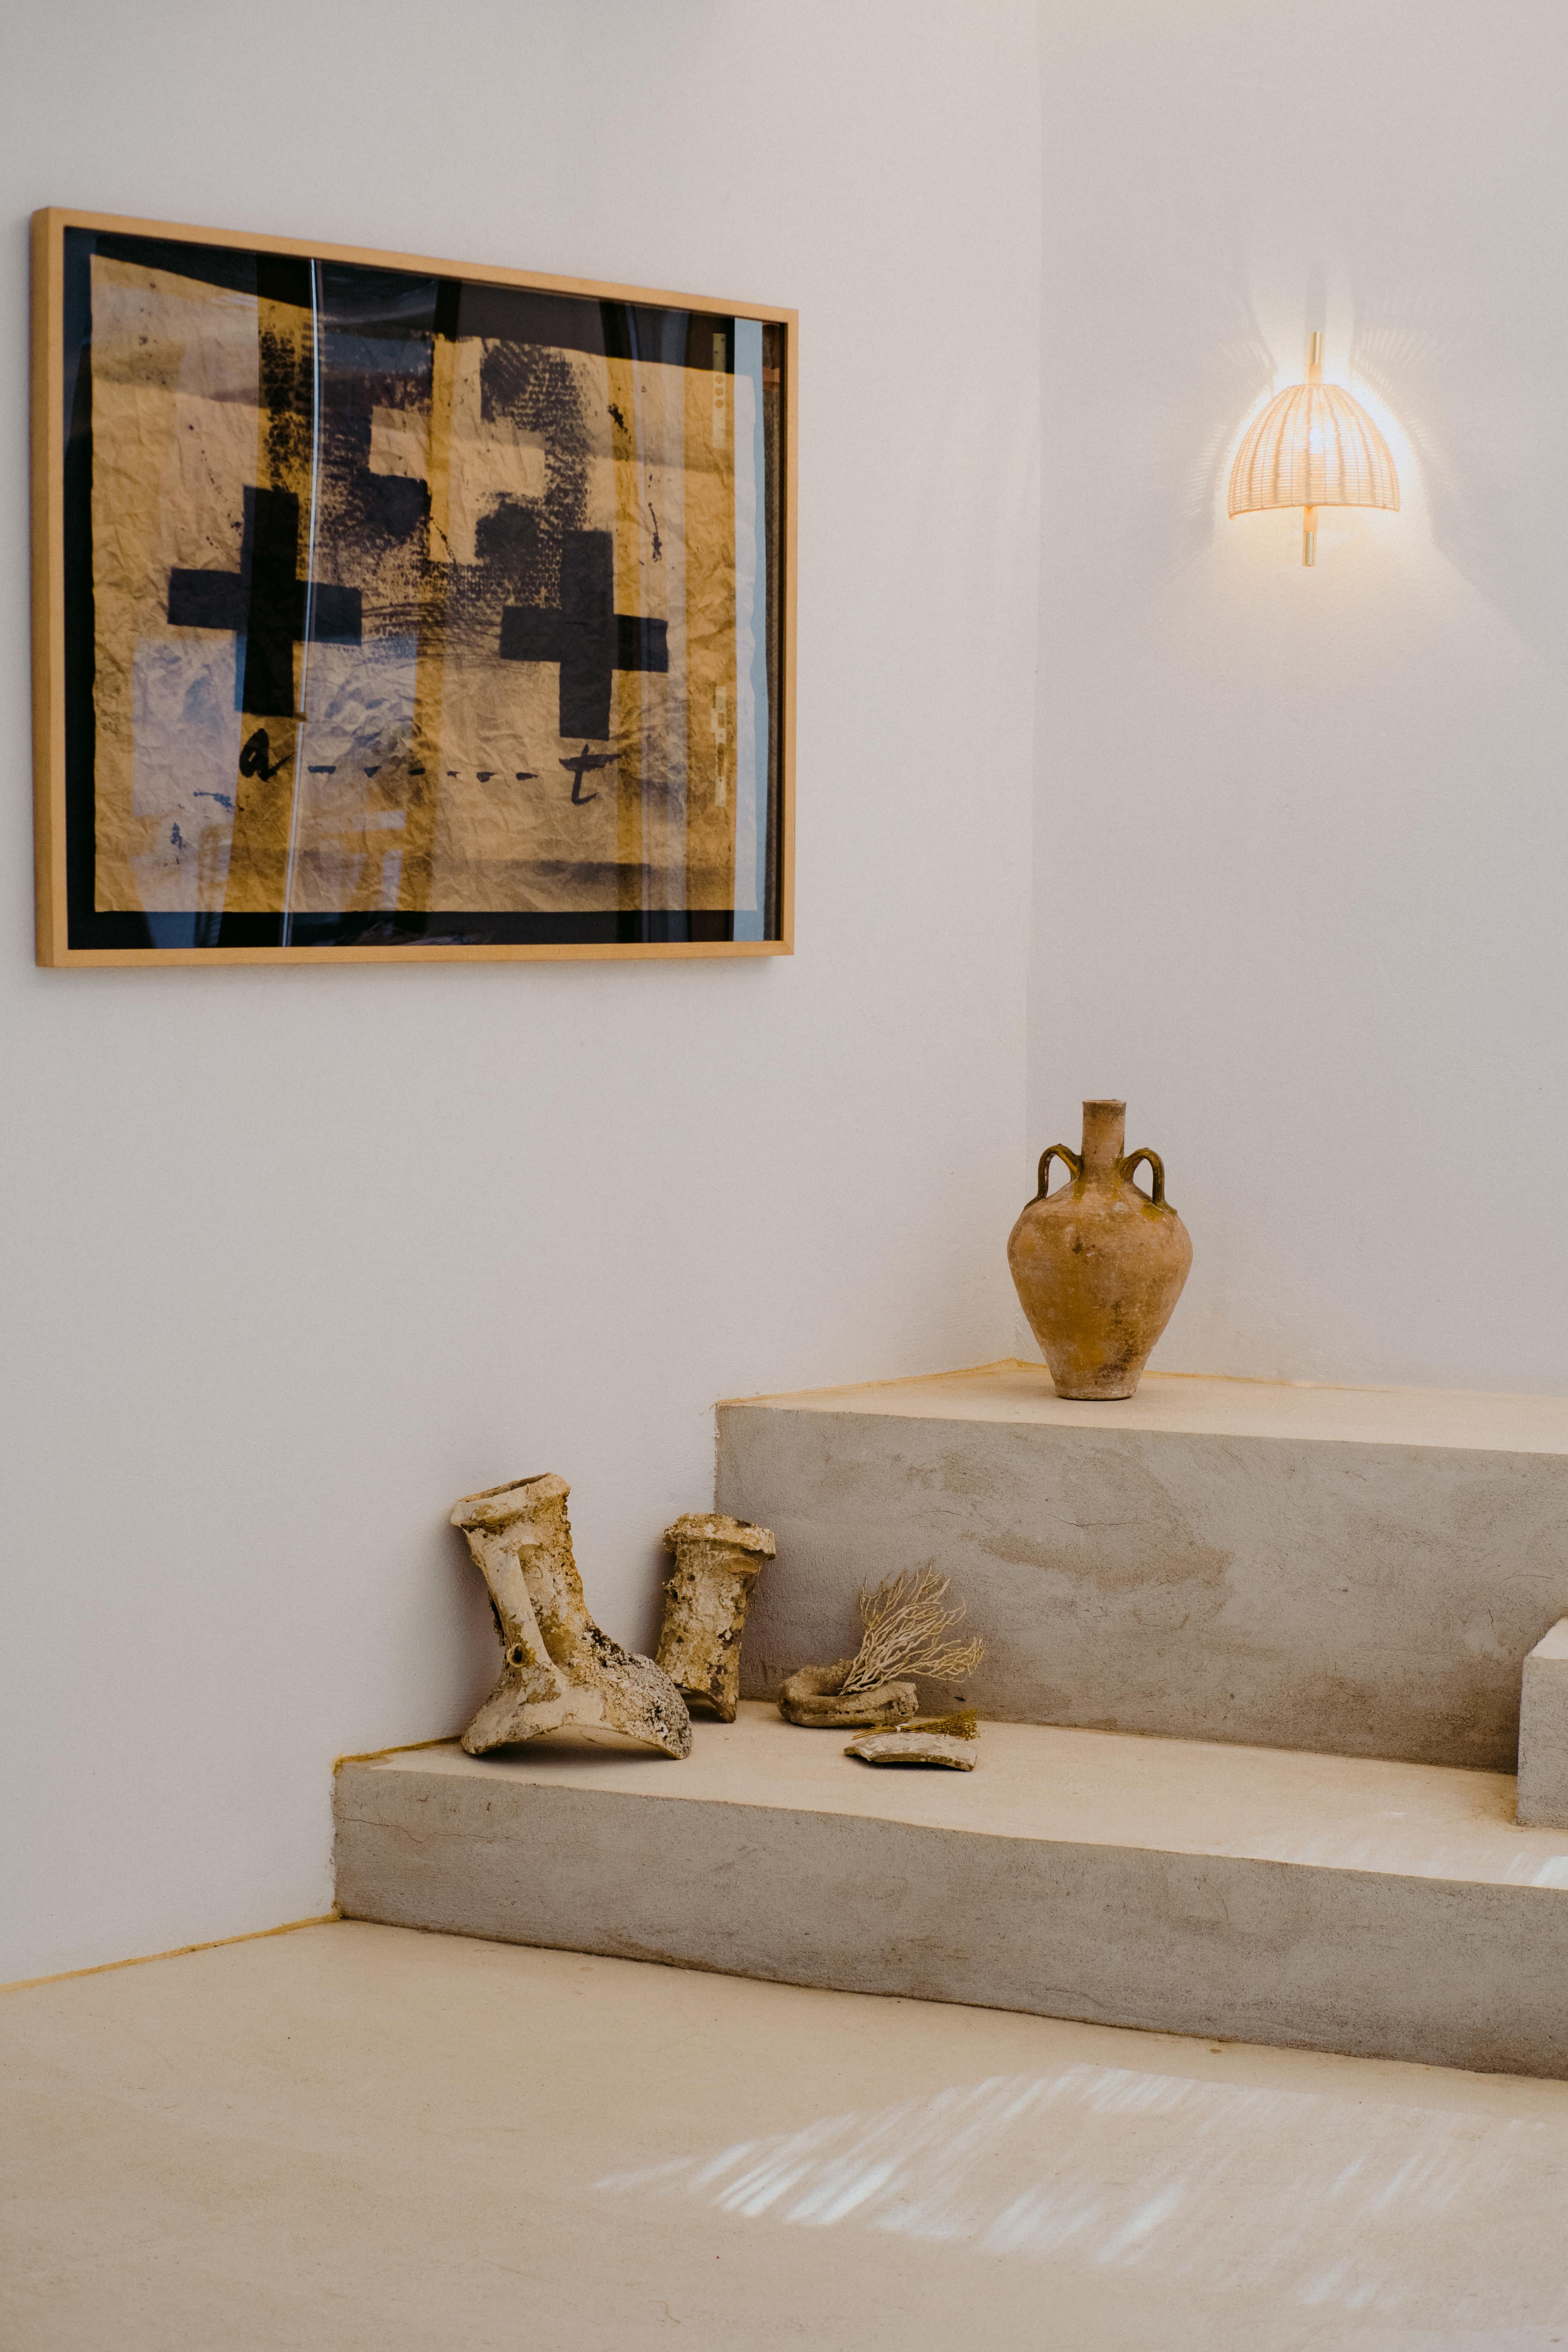 Spanish Pair of, Handmade, Wall Lamp, Natural Rattan Brass, Mediterranean Objects, A